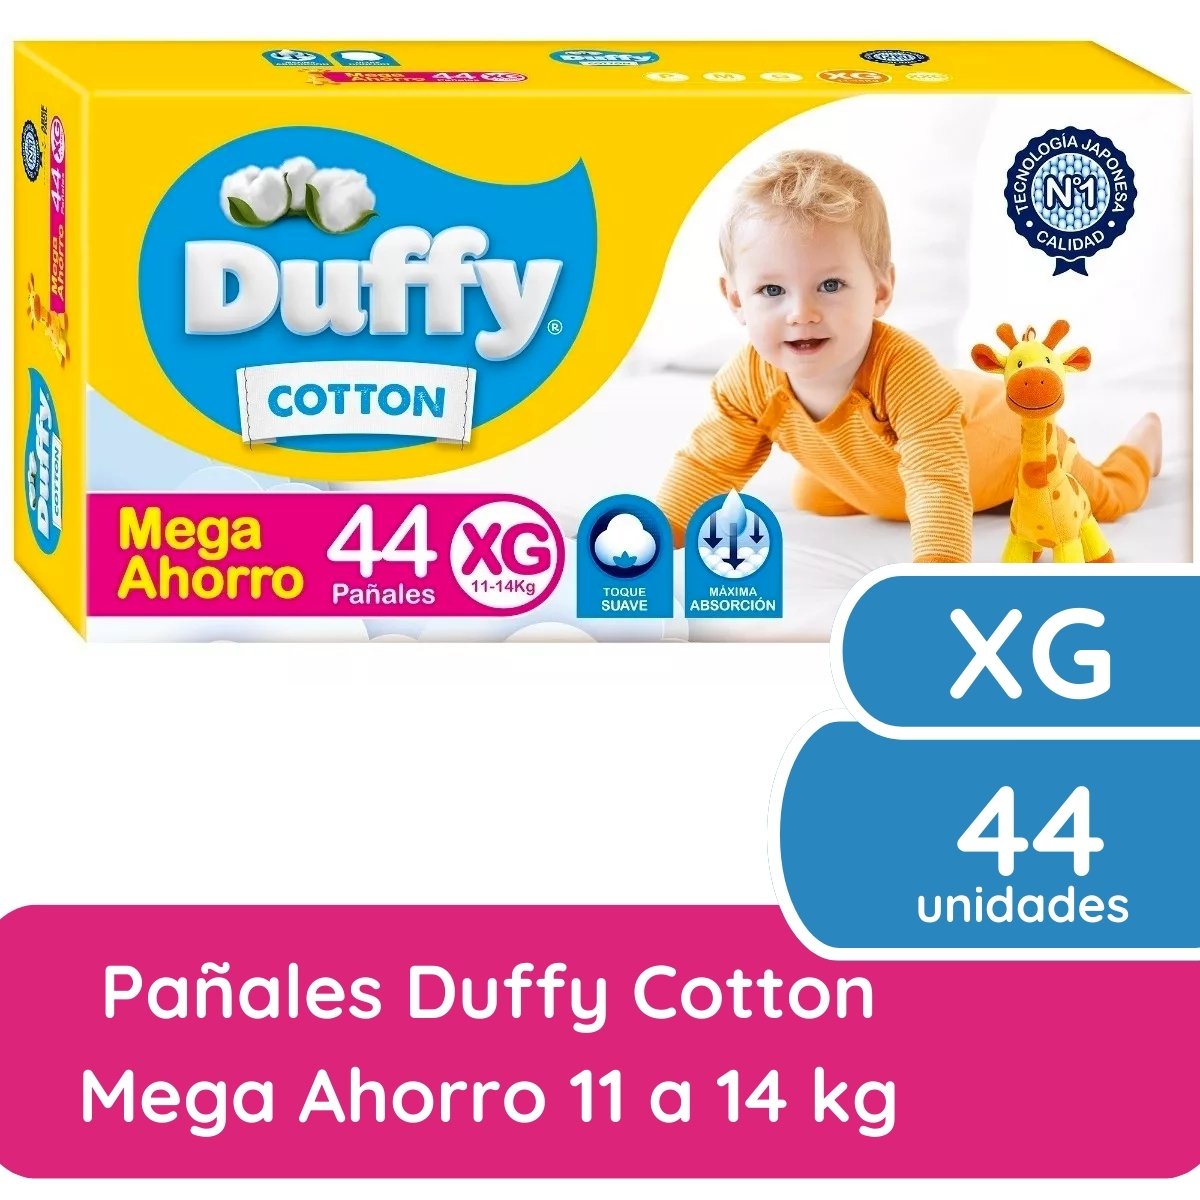 Imagen 1 de 4 de Pañales Duffy Cotton XG x 44 unidades